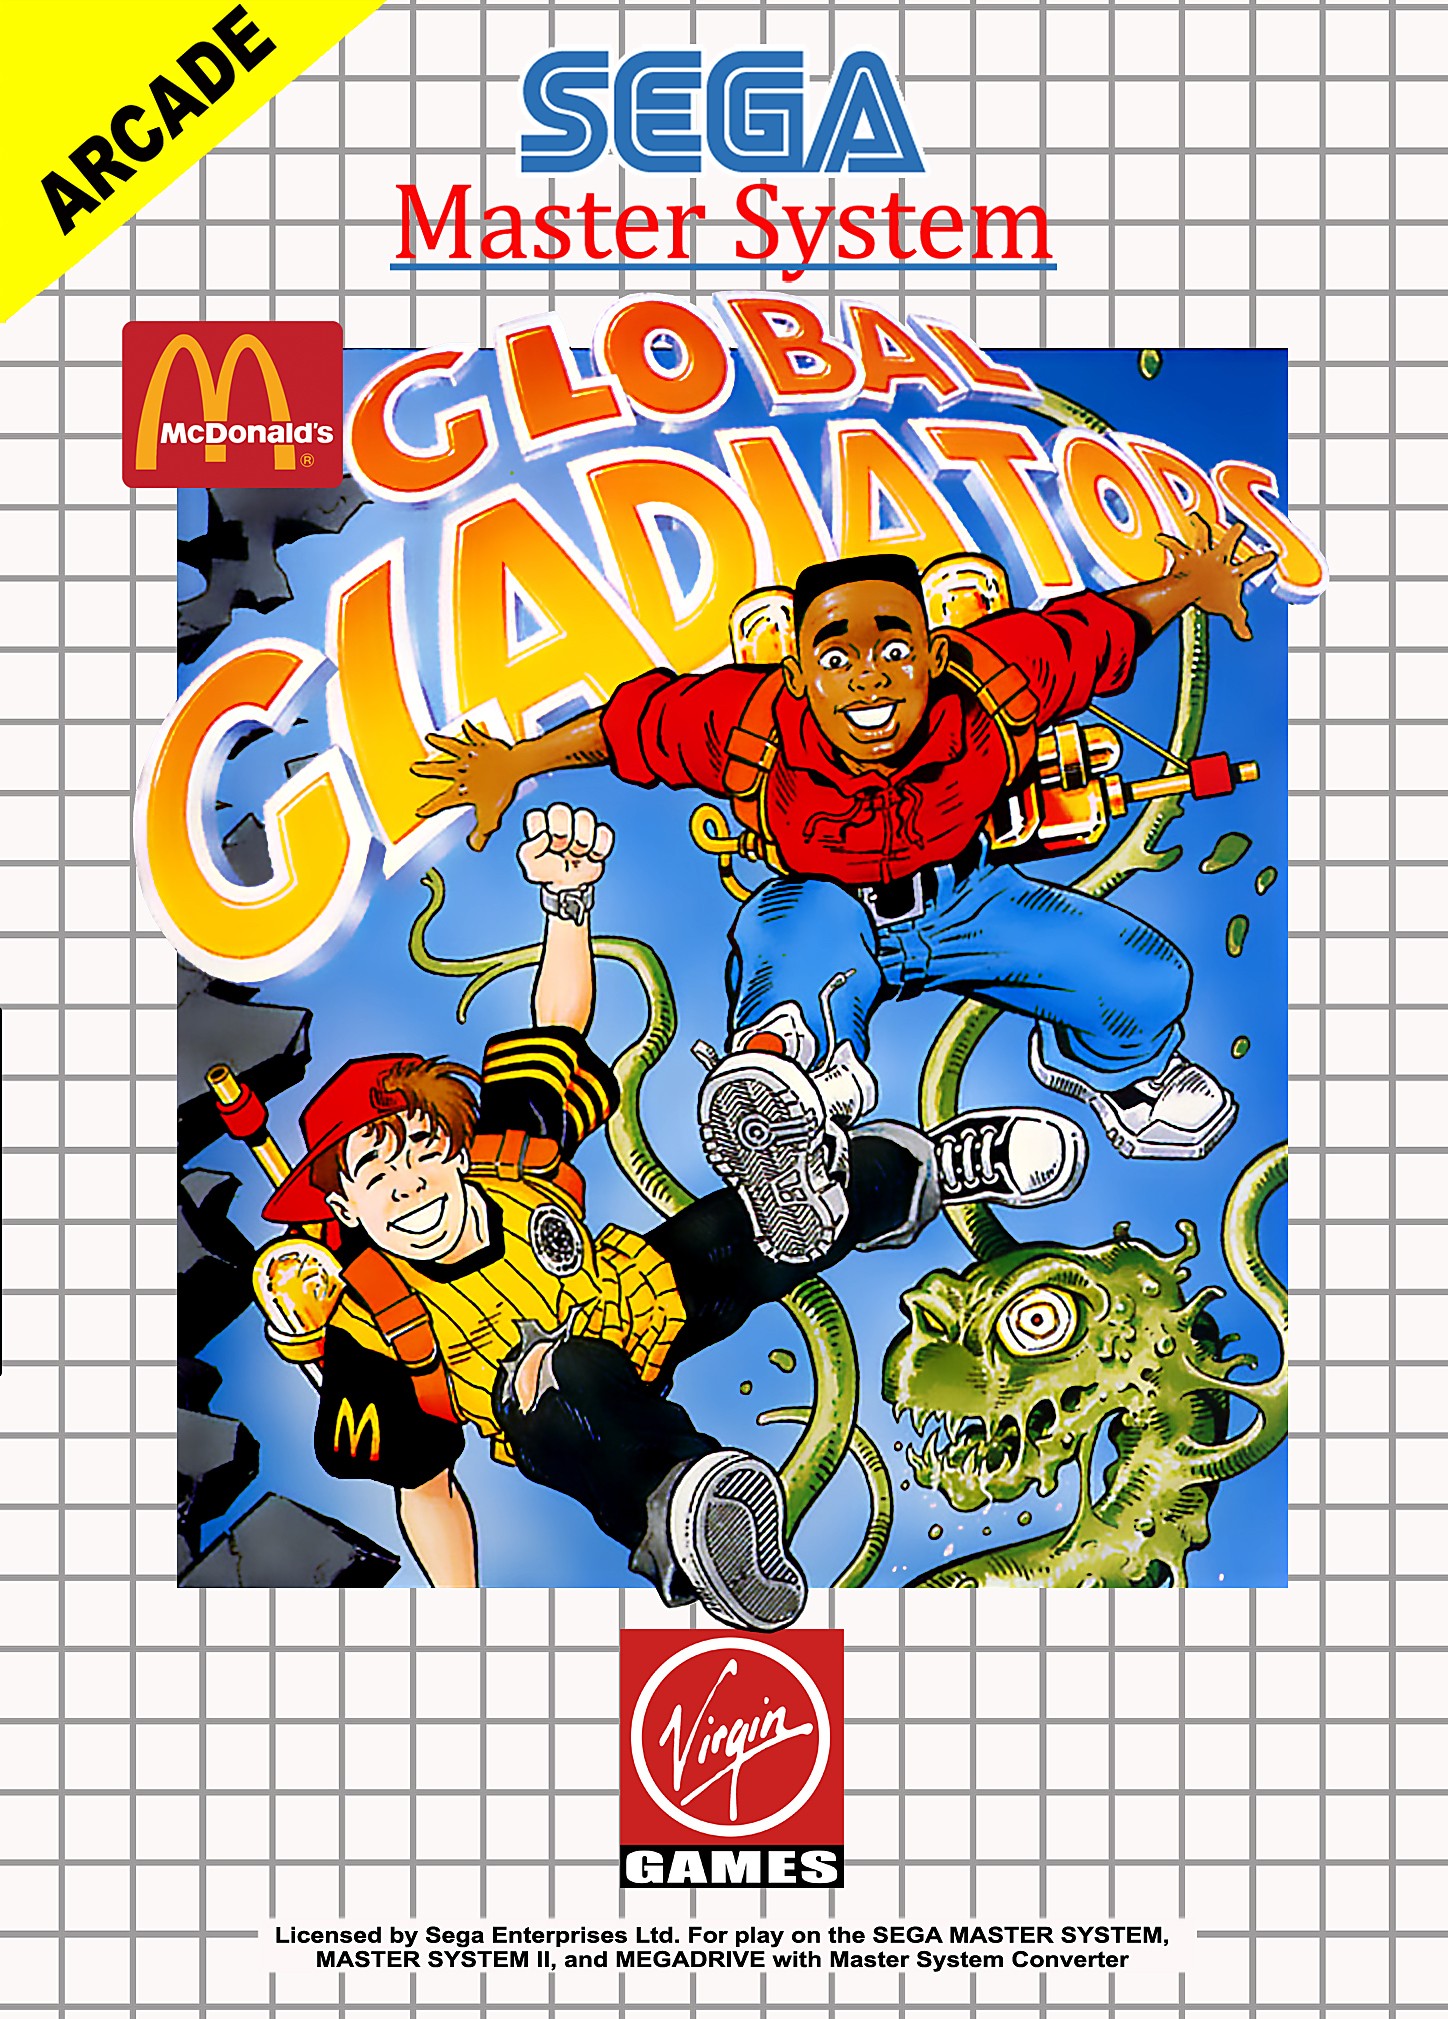 'Global Gladiators'